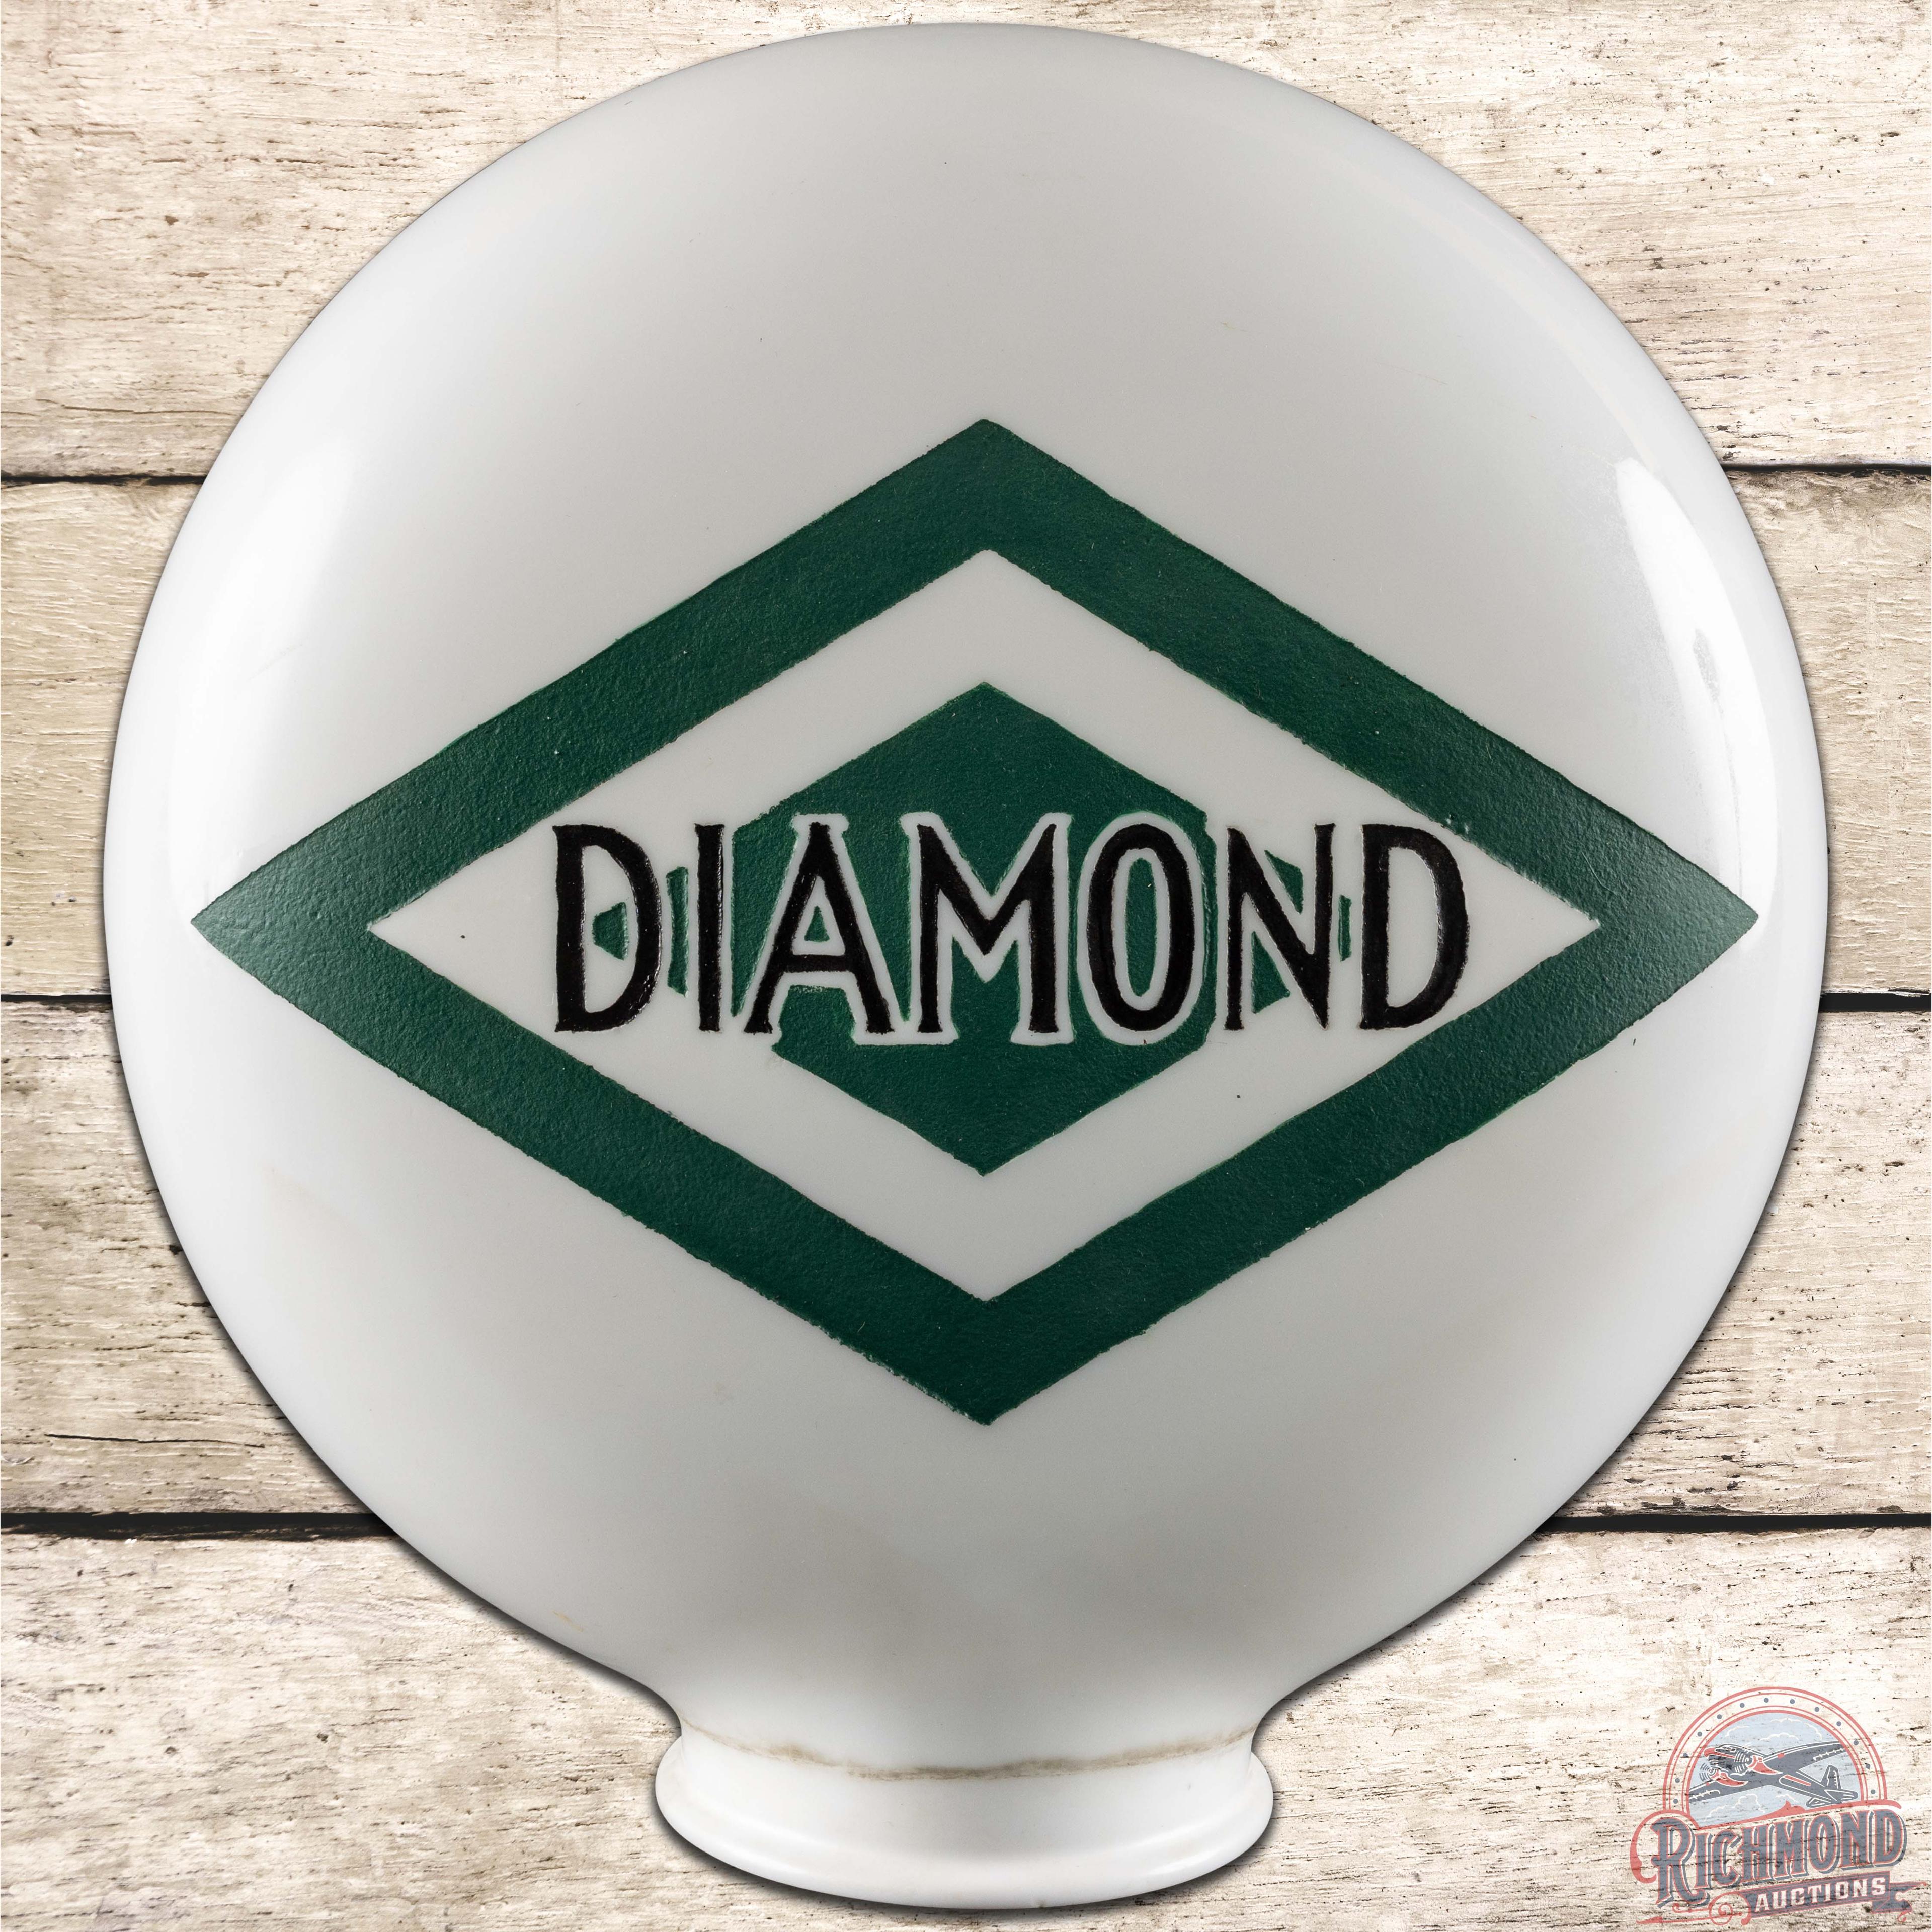 D-X Diamond Gasoline OPE Milk Glass Gas Pump Globe Body